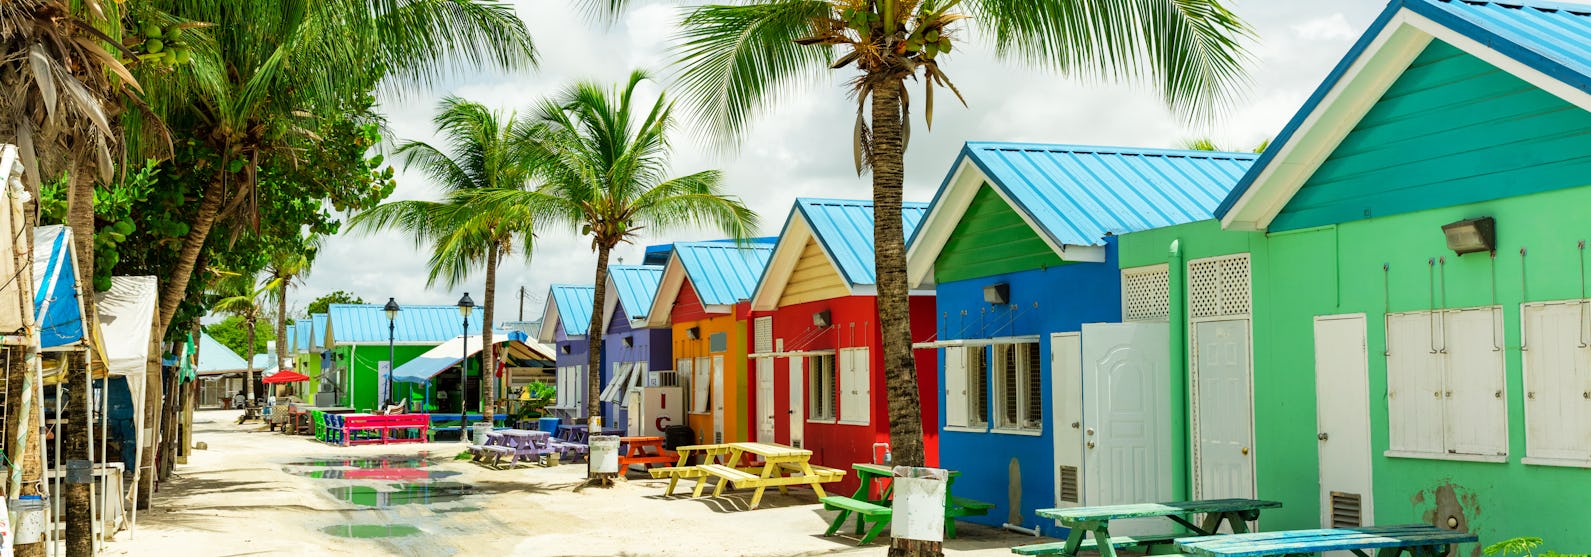 Barbados-Bridgetown-Caribbean